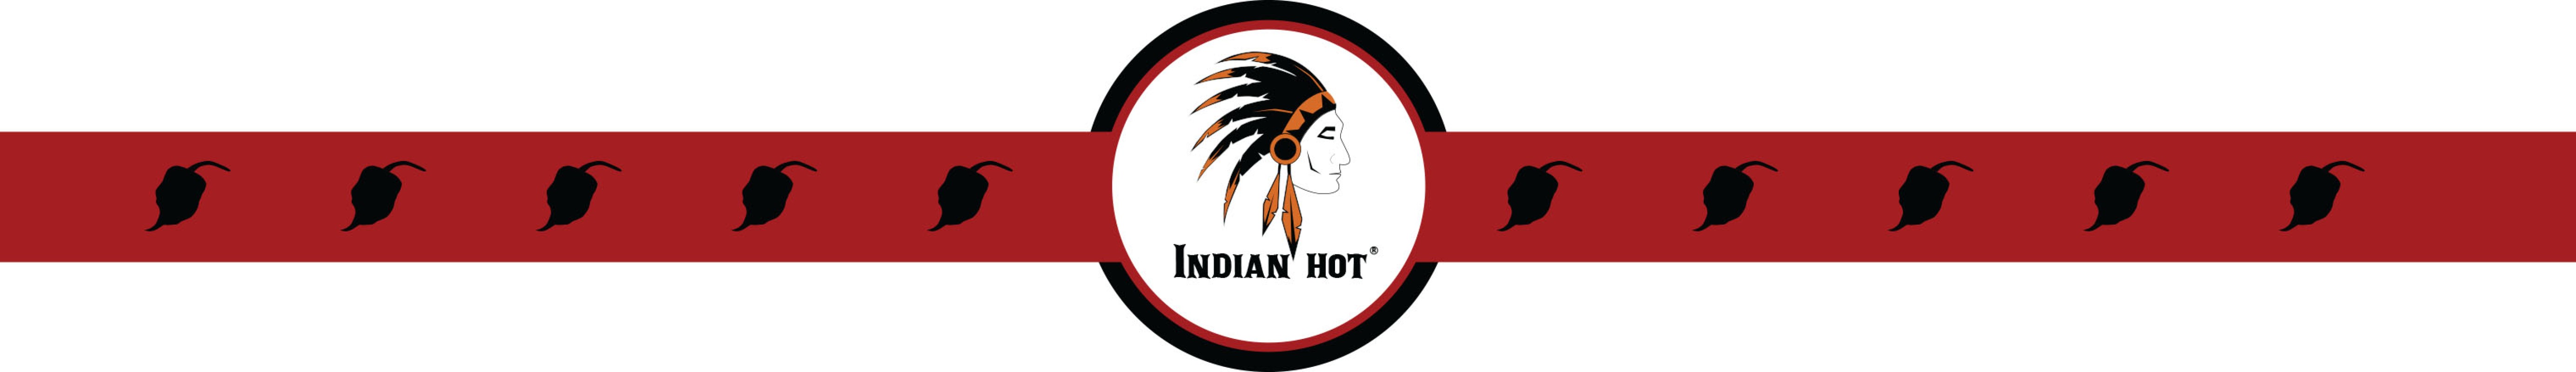 Red Hot Carolina Reaper Paste 245g | Indian Hot